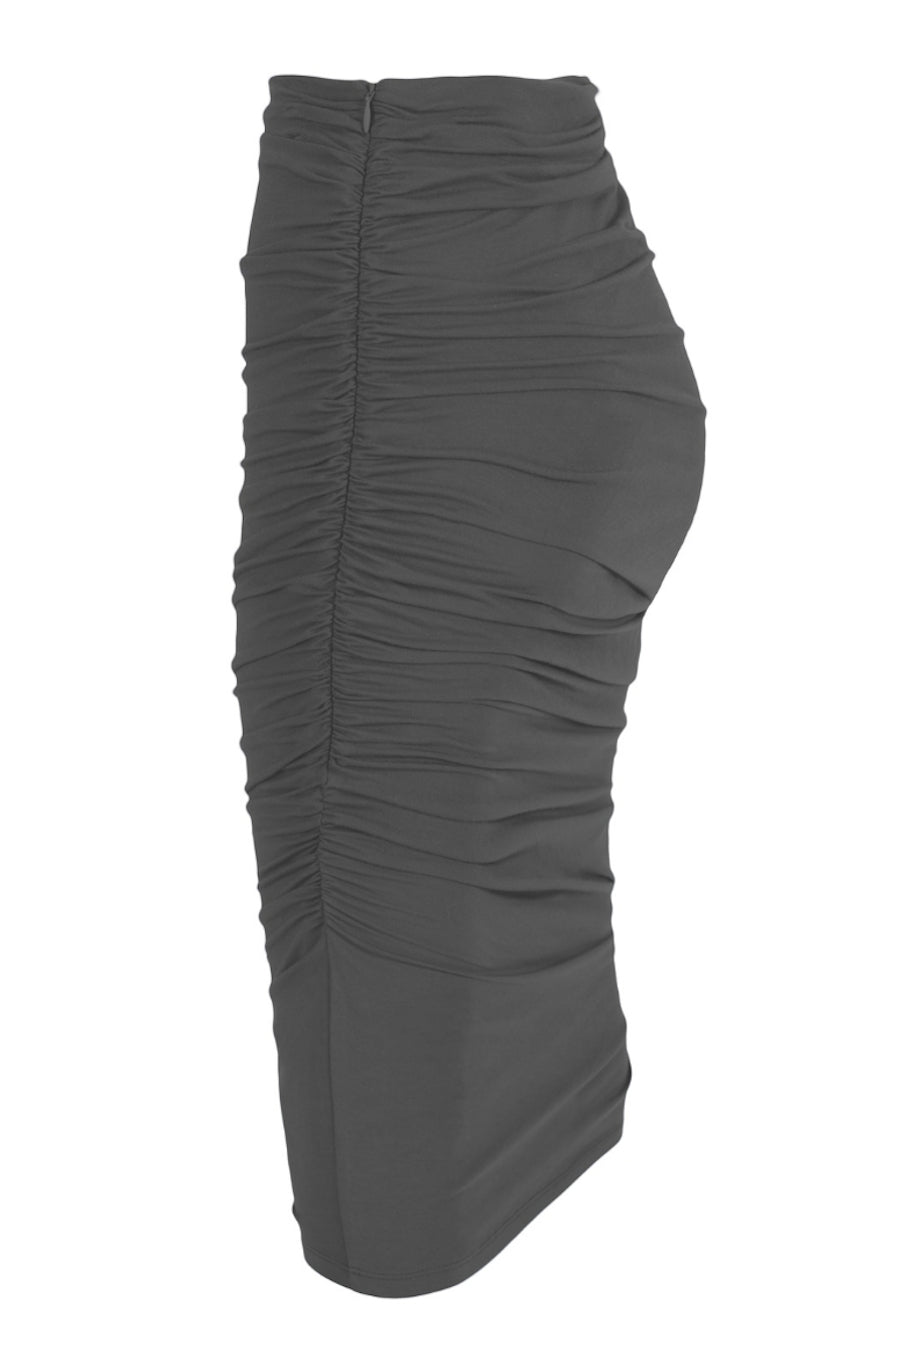 Embodycon™ Bamboo Shaping Skirt - Charcoal Embodycon